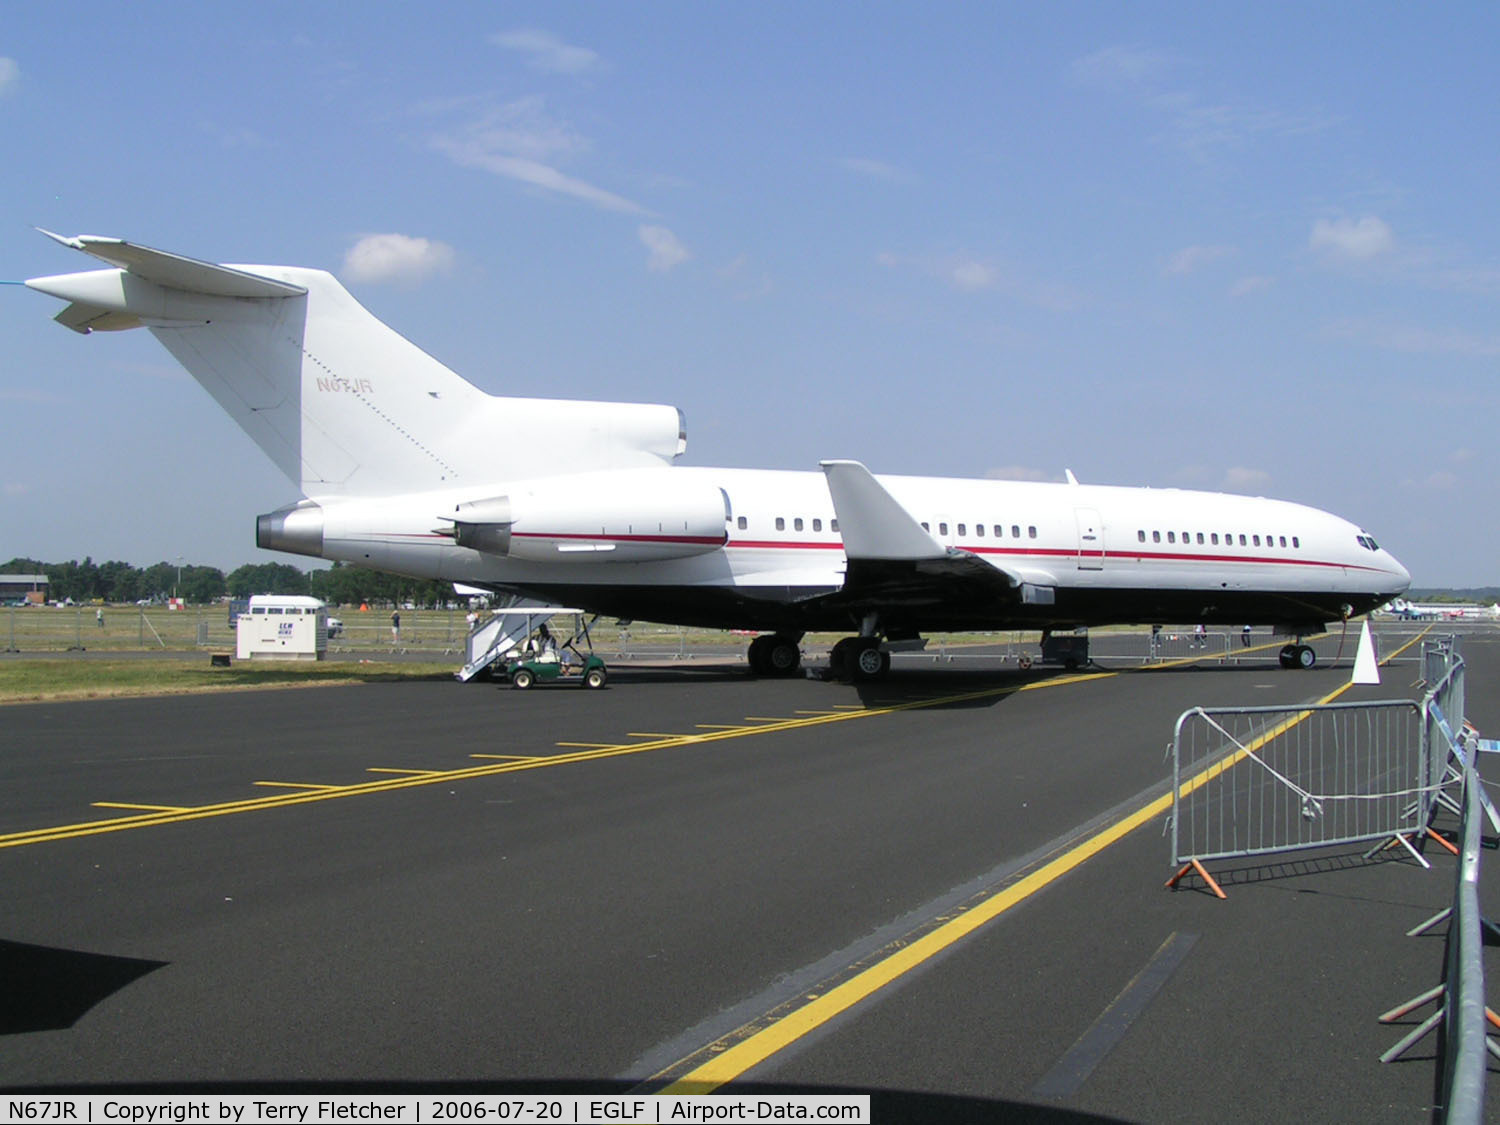 N67JR, 1966 Boeing 727-30 C/N 18936, Displayed at the 2006 Farnborough Air Show